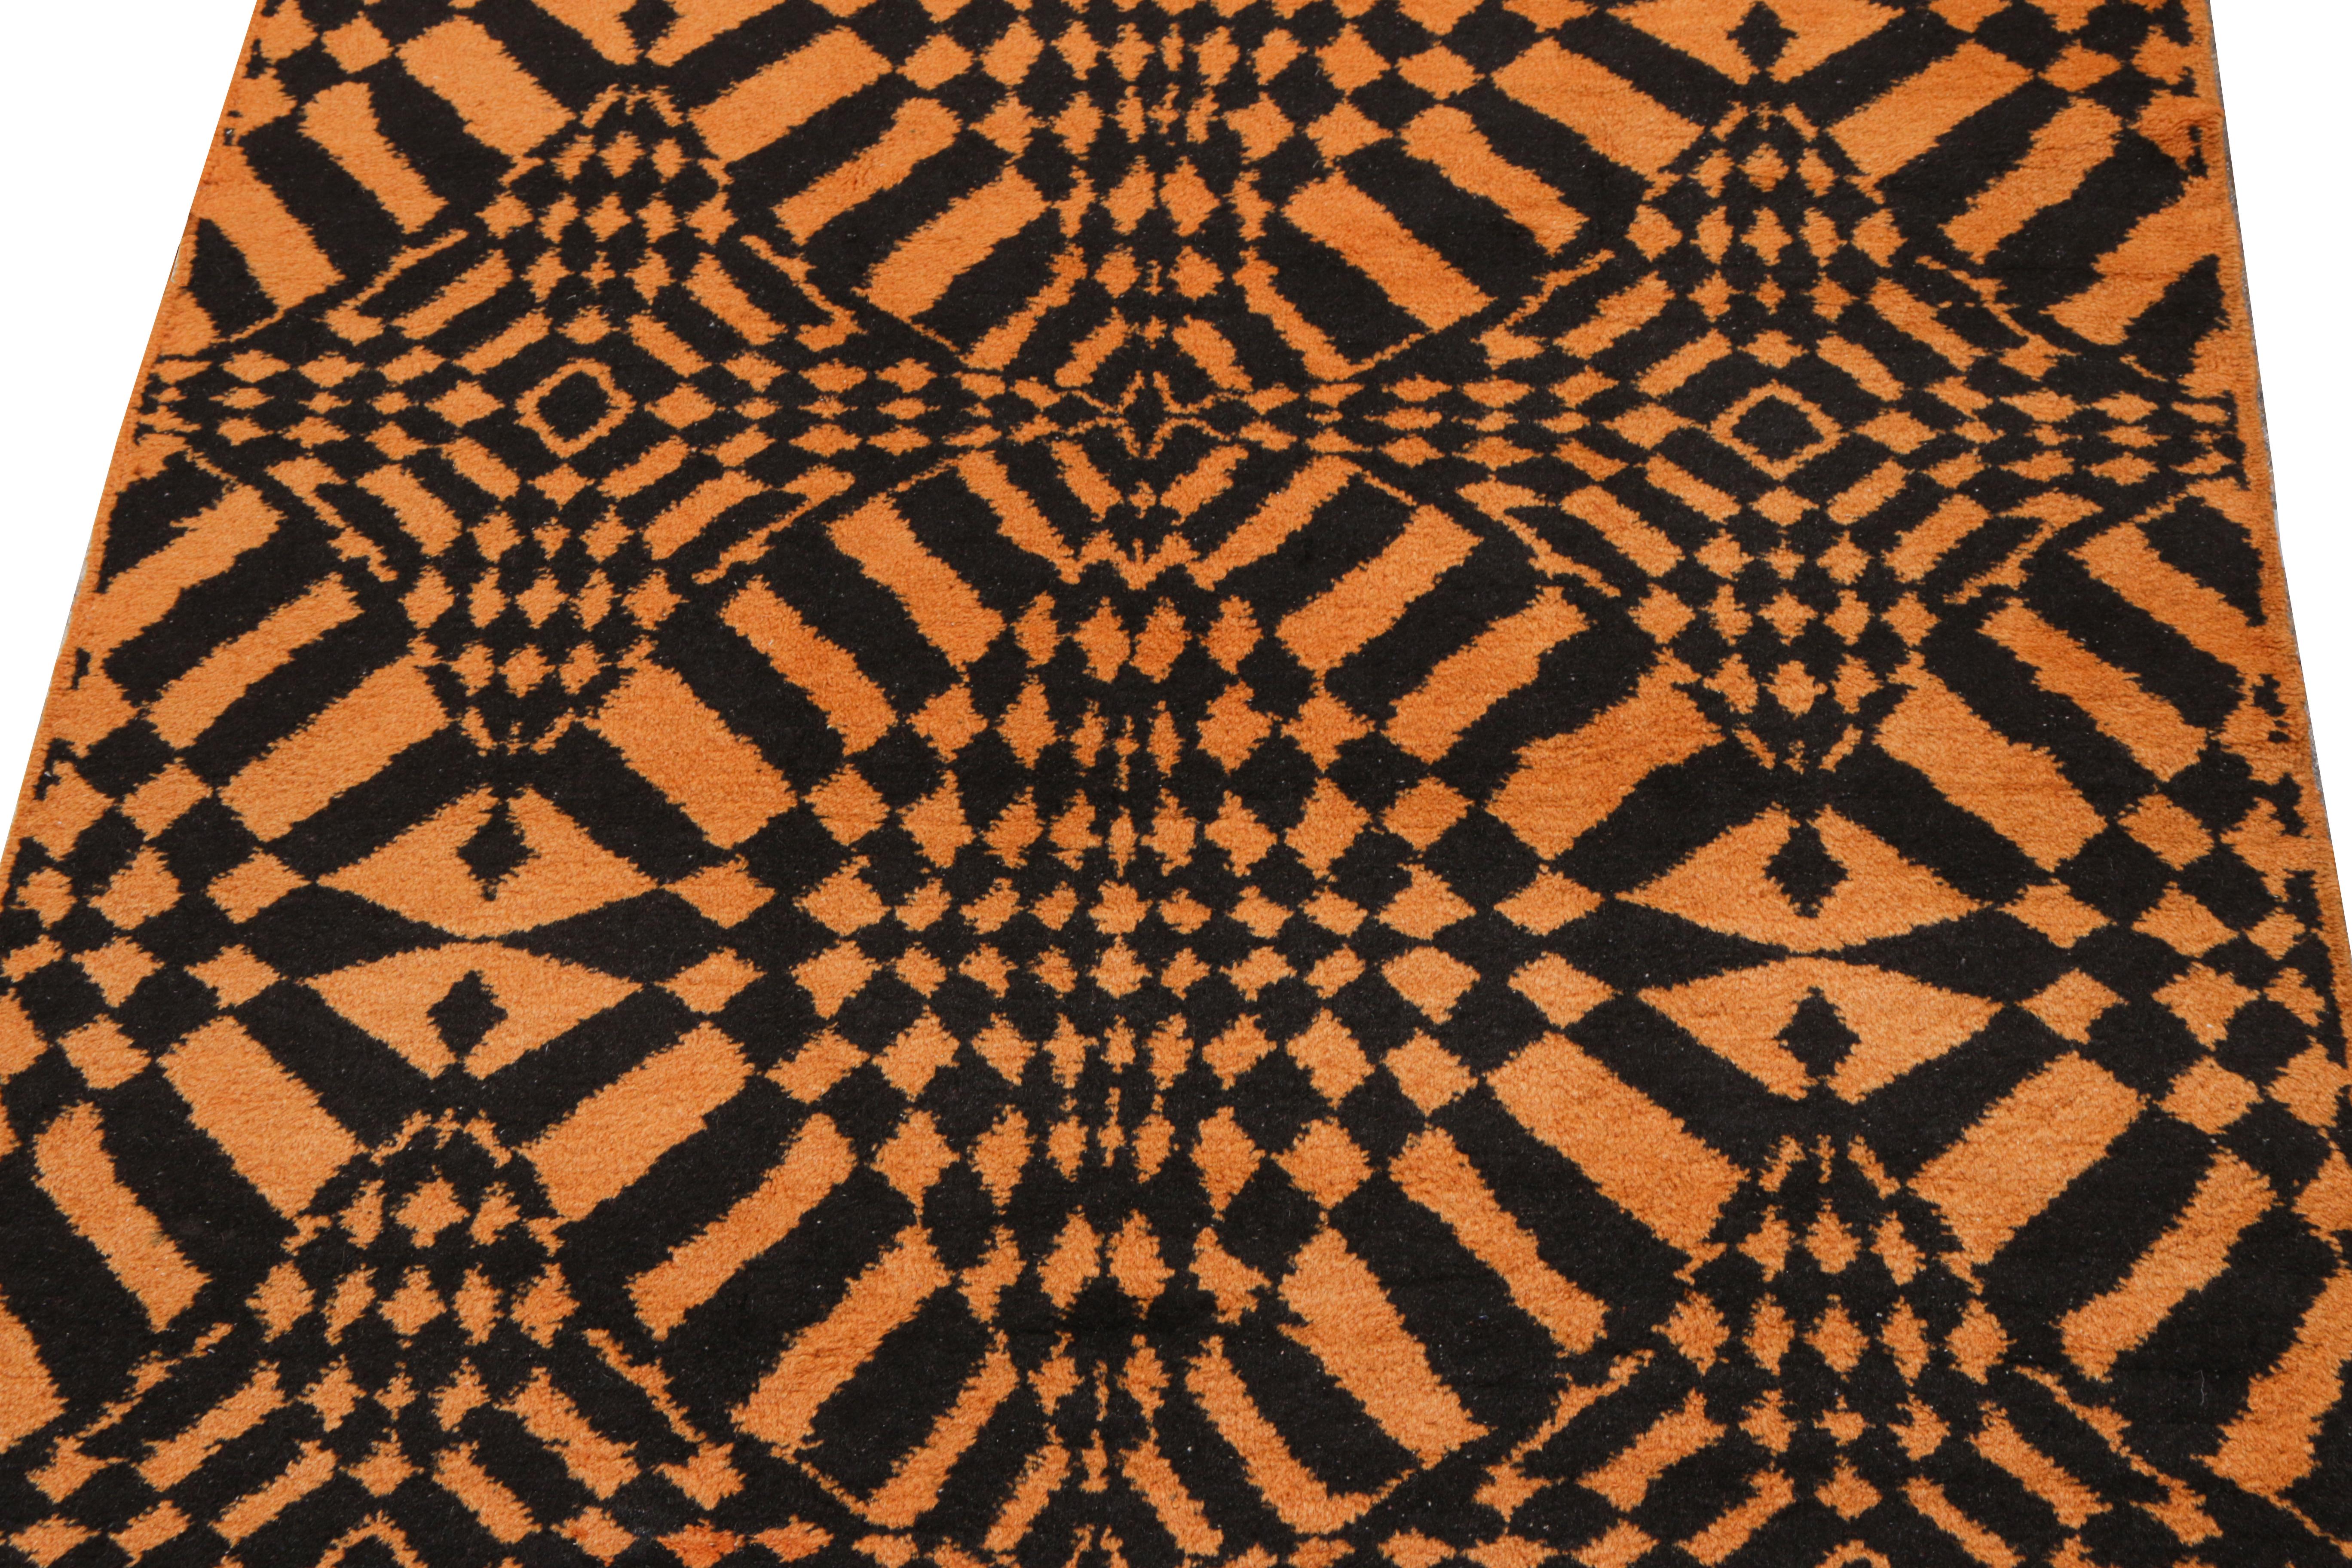 Turkish 1960s Vintage Art Deco Rug in Black and Orange Geometric Pattern by Rug & Kilim For Sale